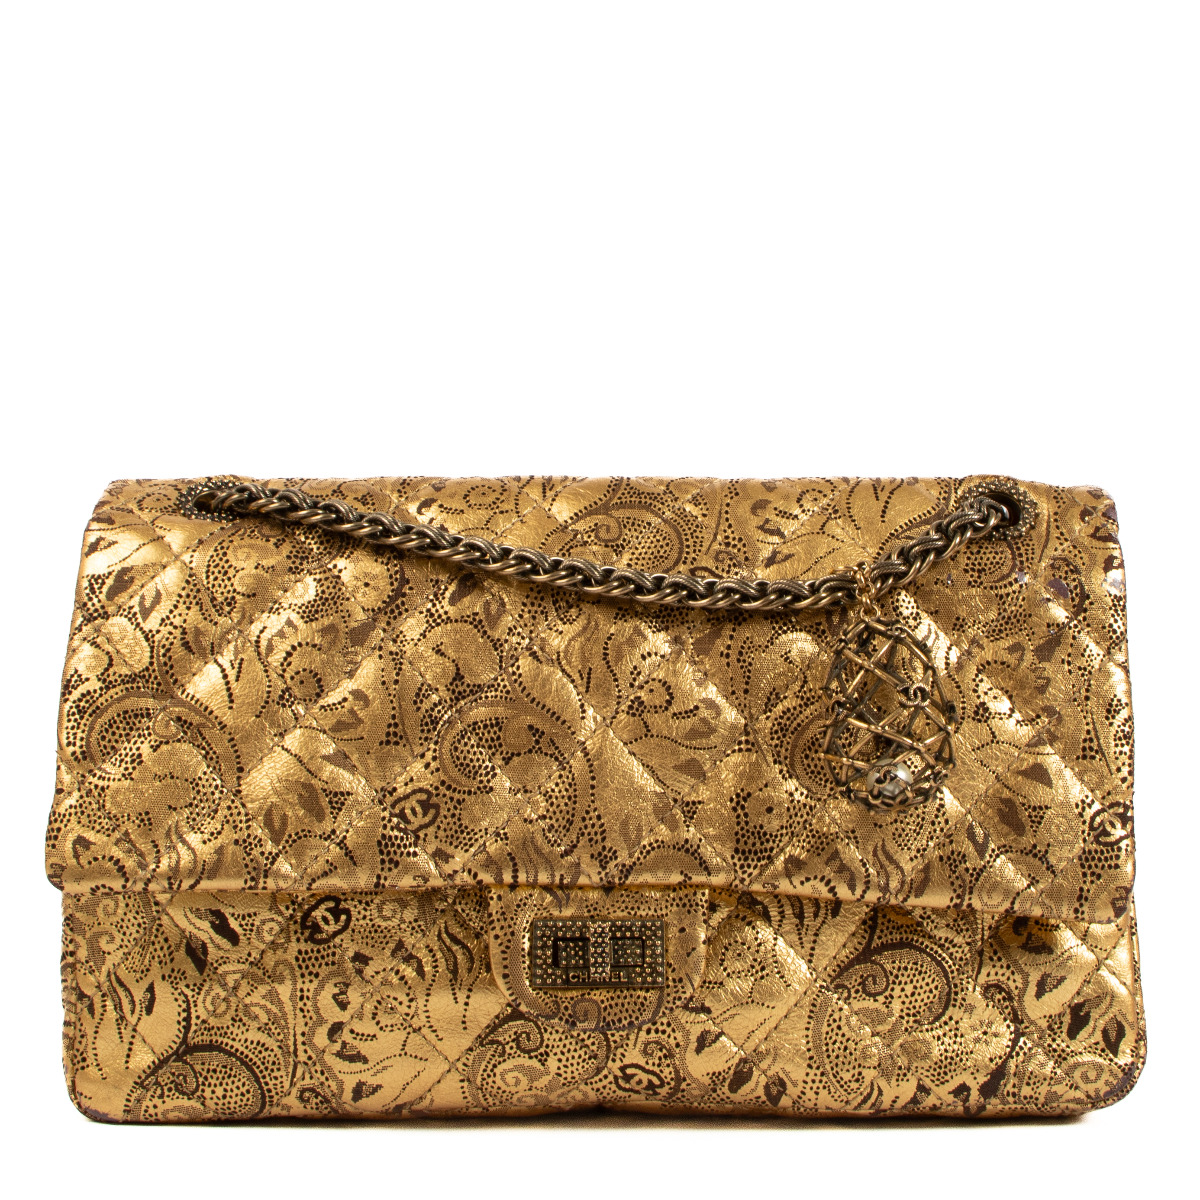 Chanel Paris-Moscow Red Square Kremlin Large Handbag